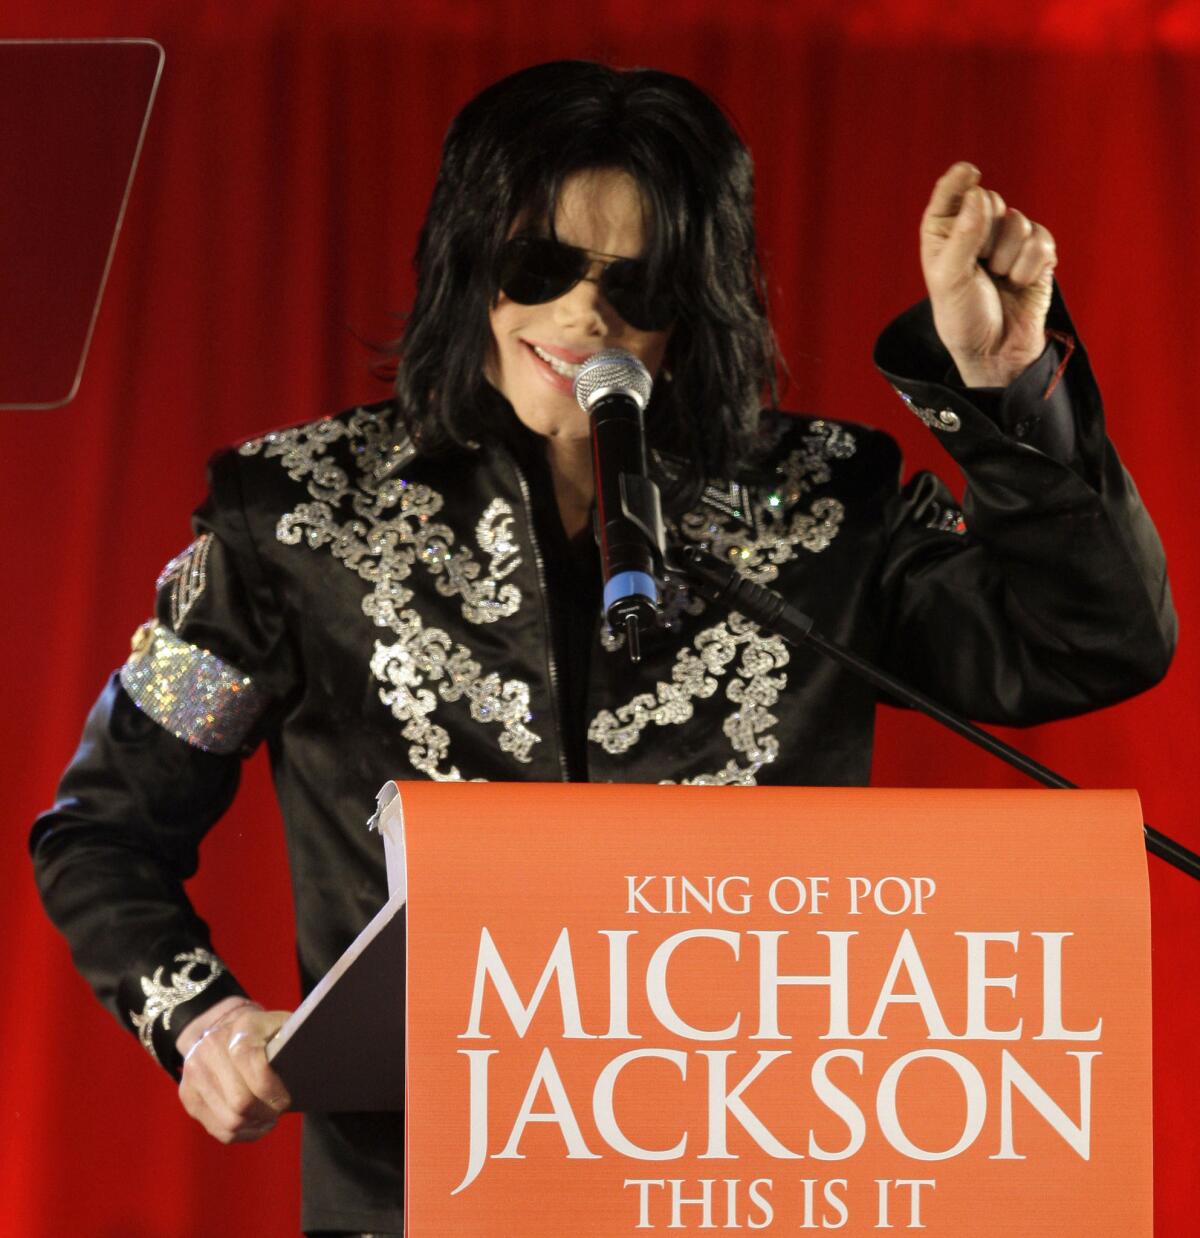 Michael Jackson announces comeback tour in 2009 in London.